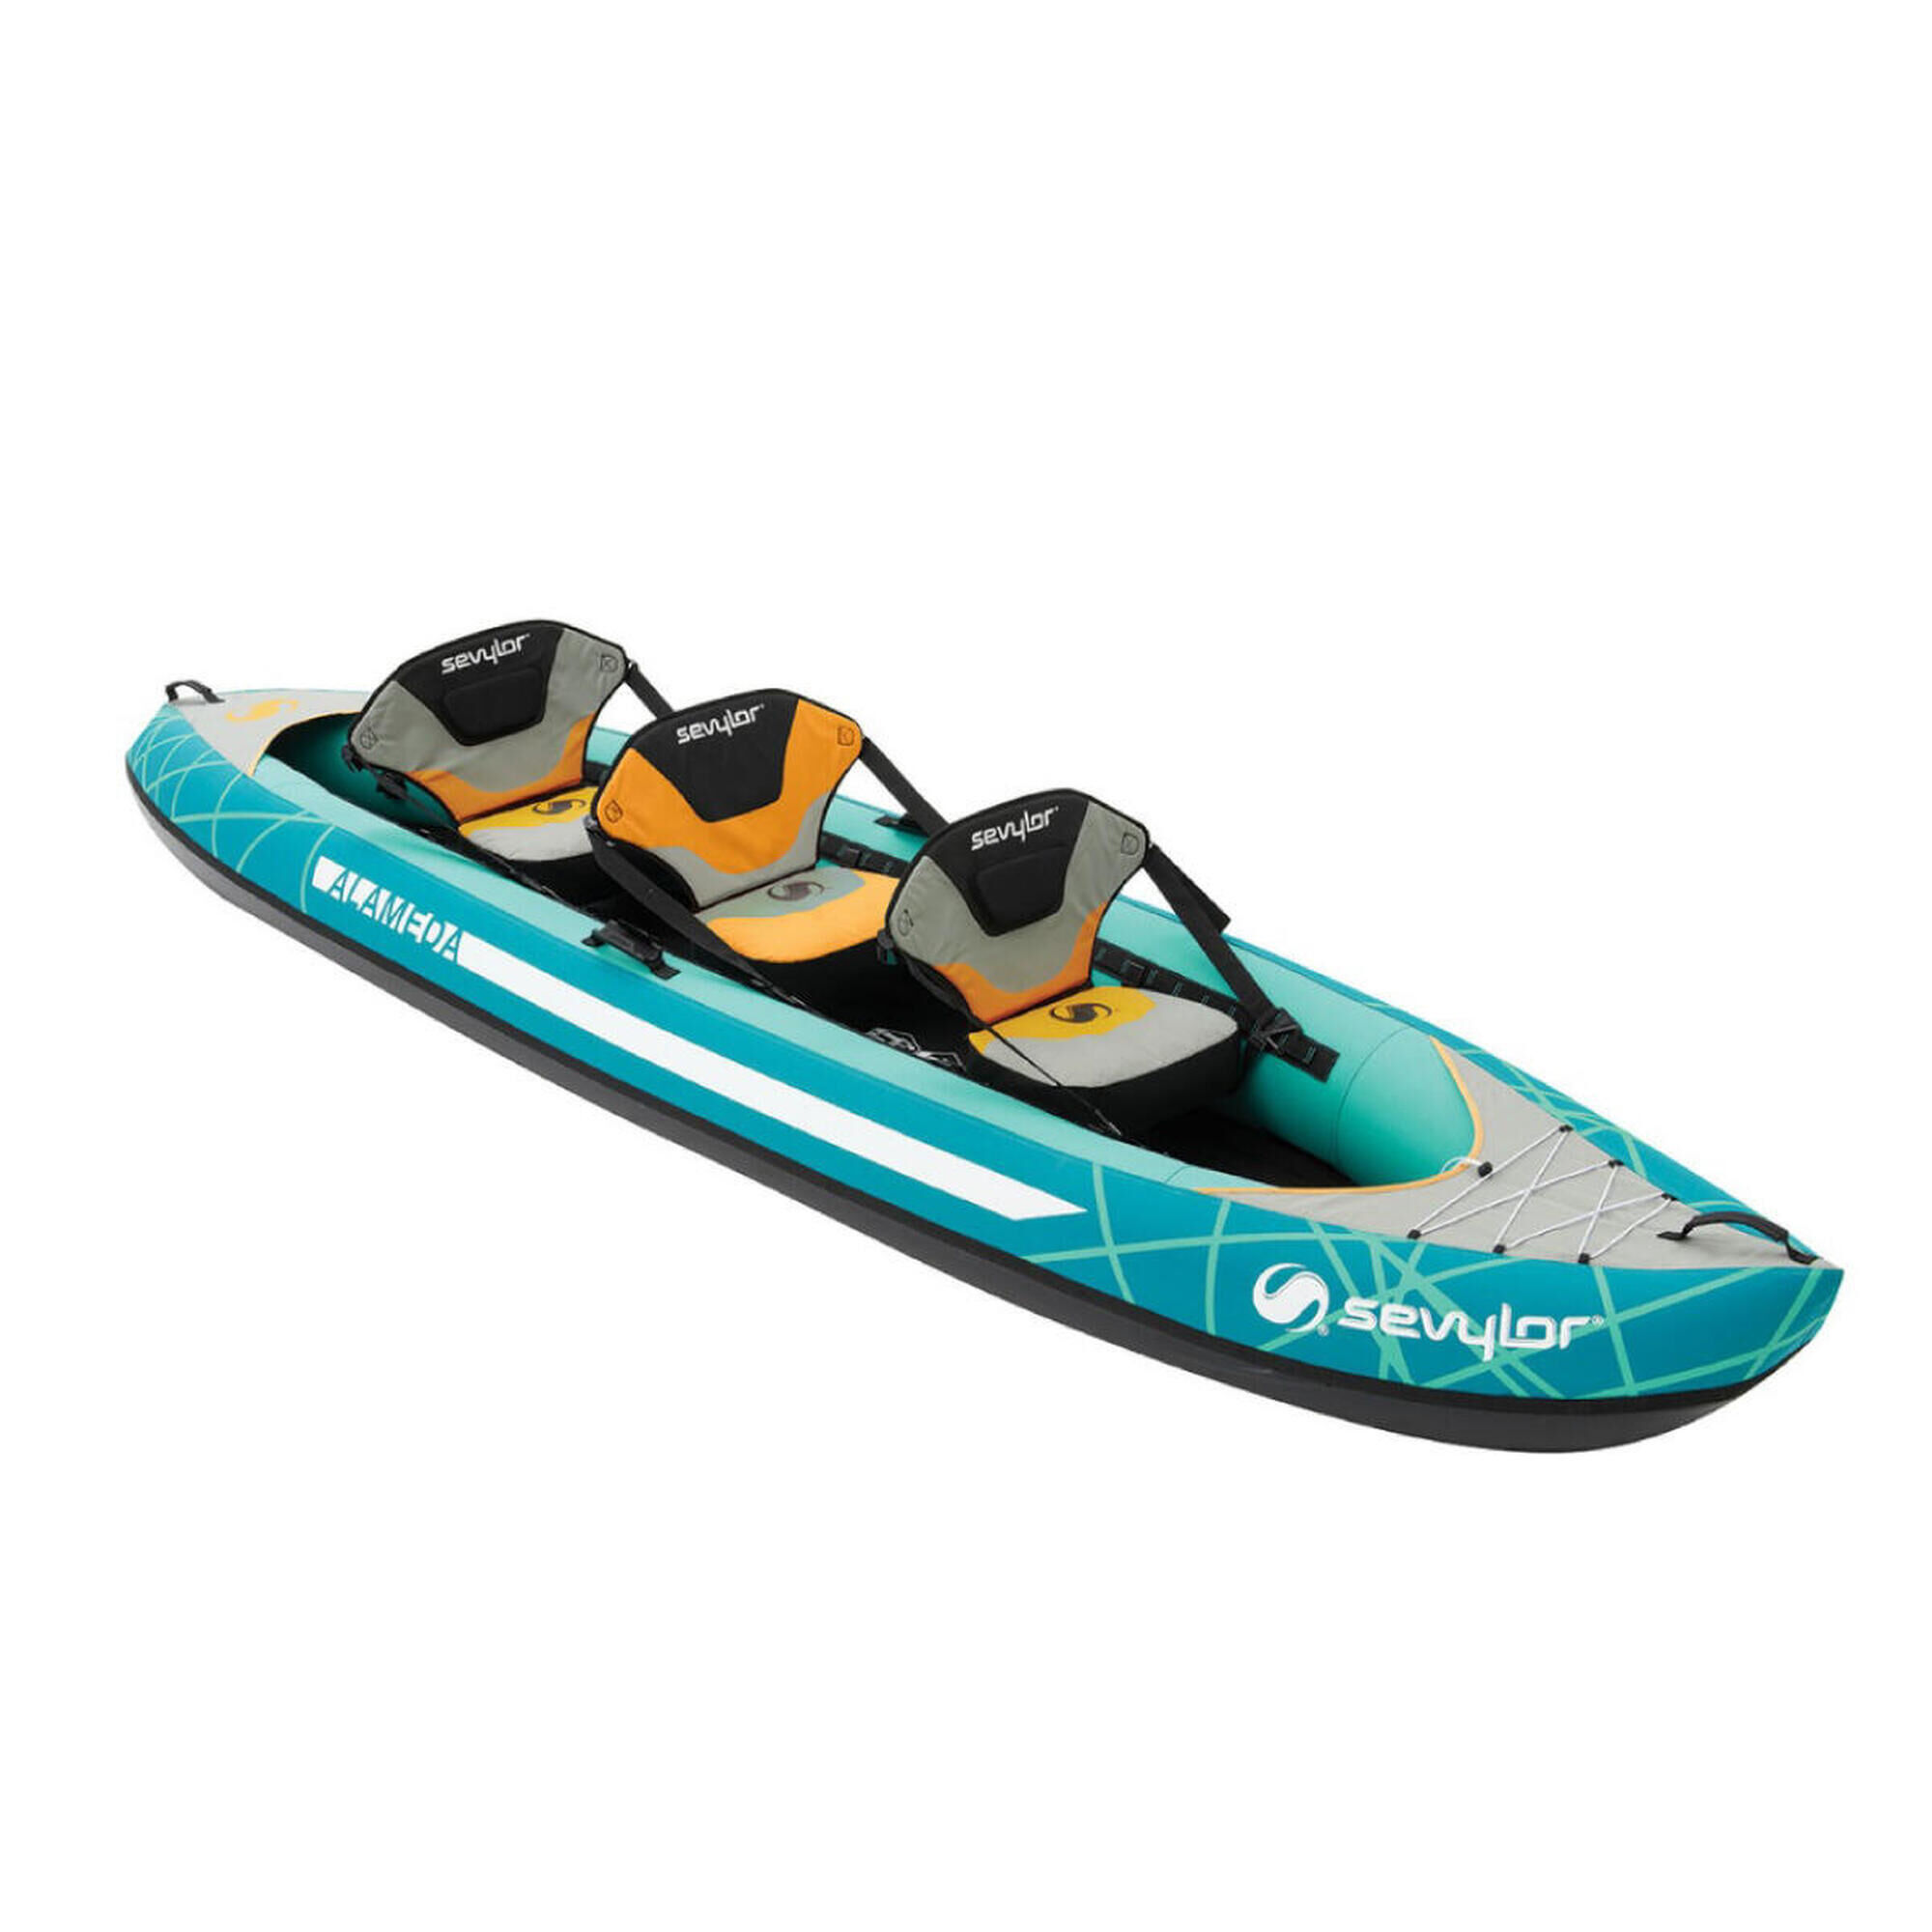 SEVYLOR Alameda 3 Person Inflatable Kayak - Blue / Green